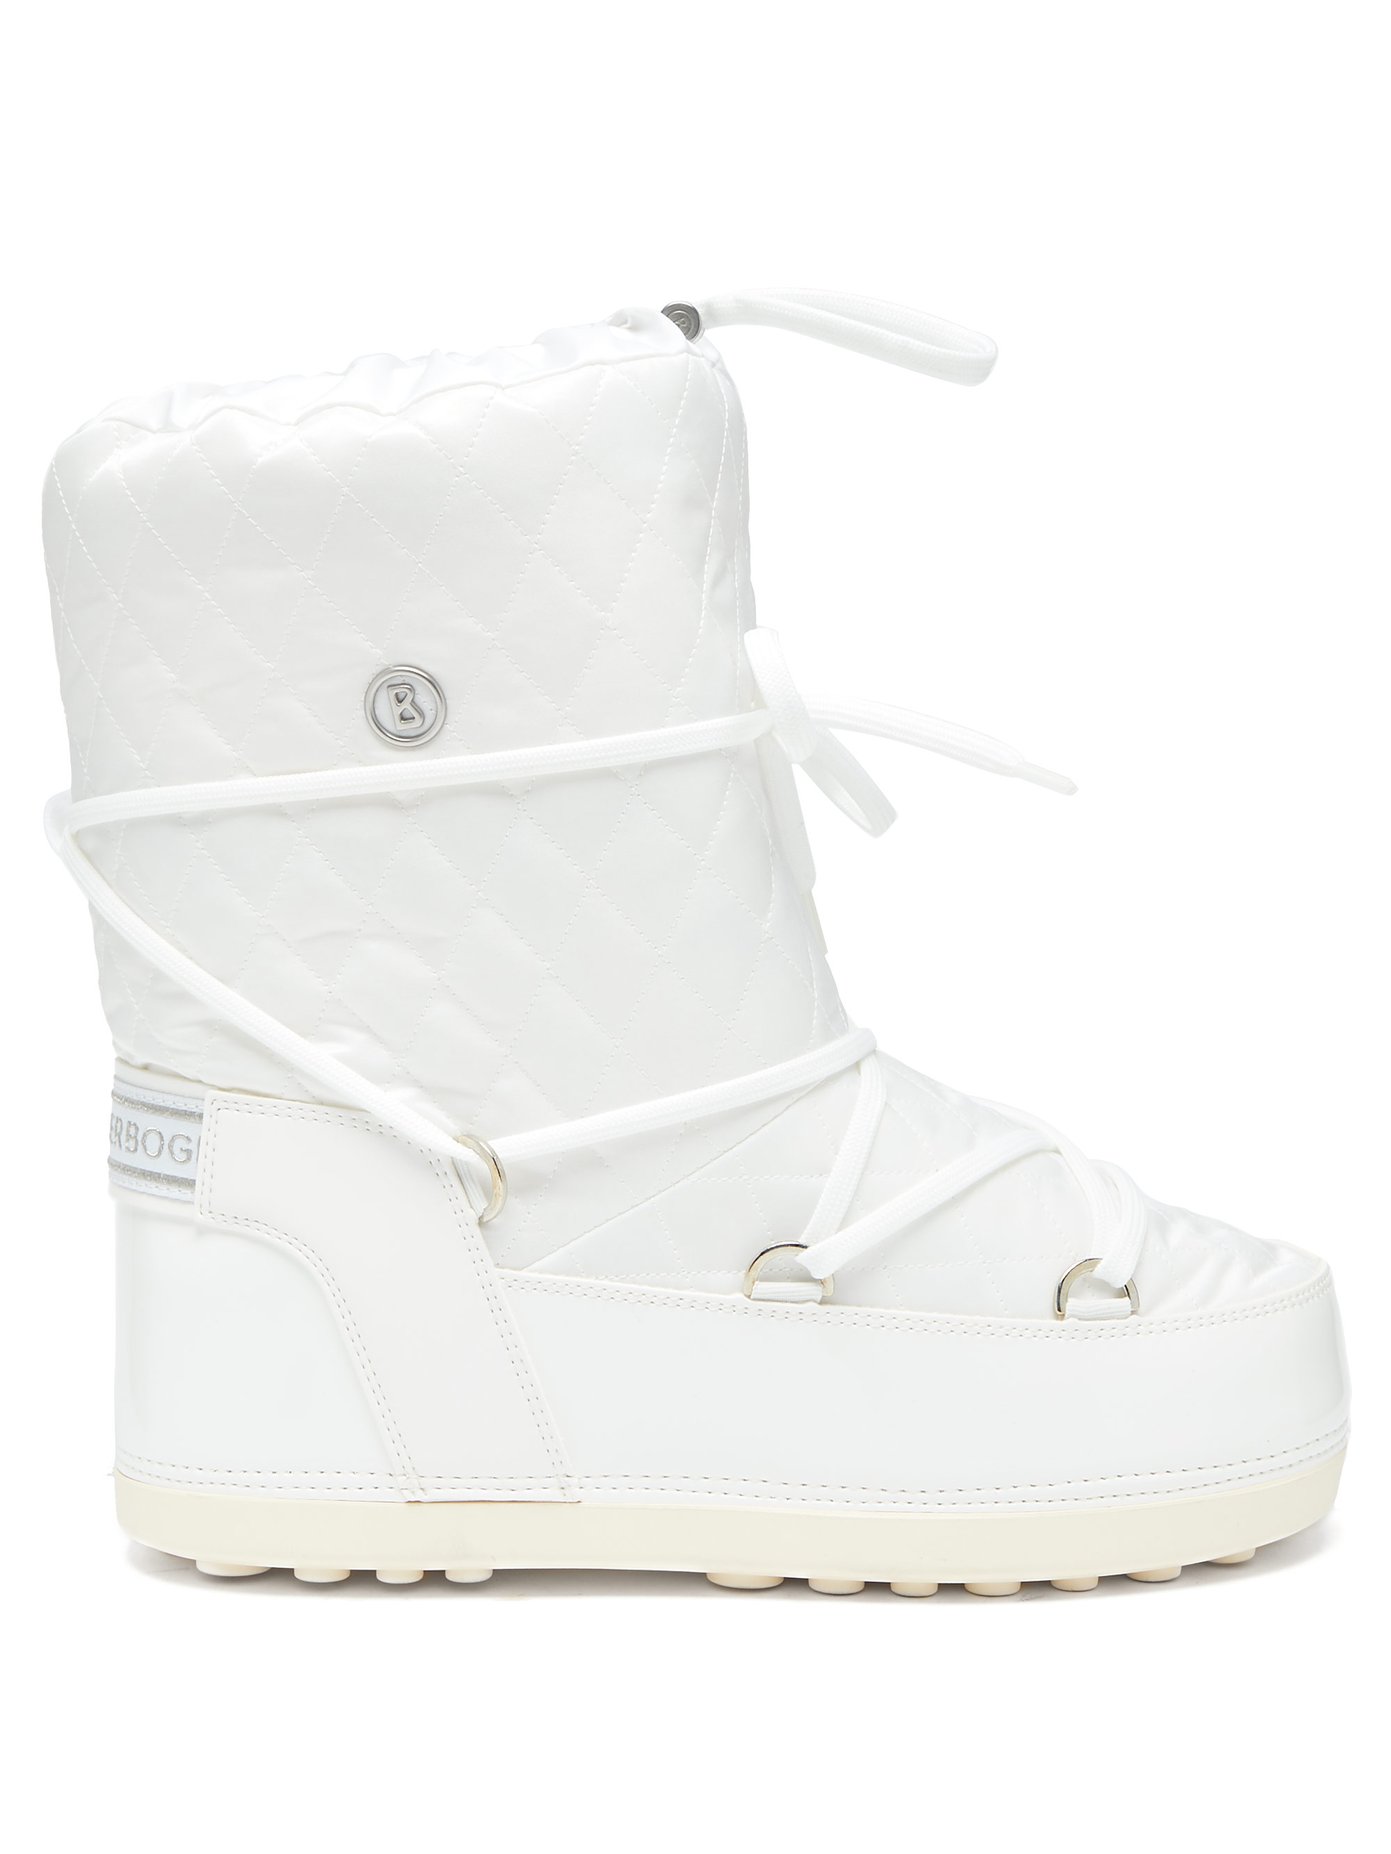 snow boots sale buy